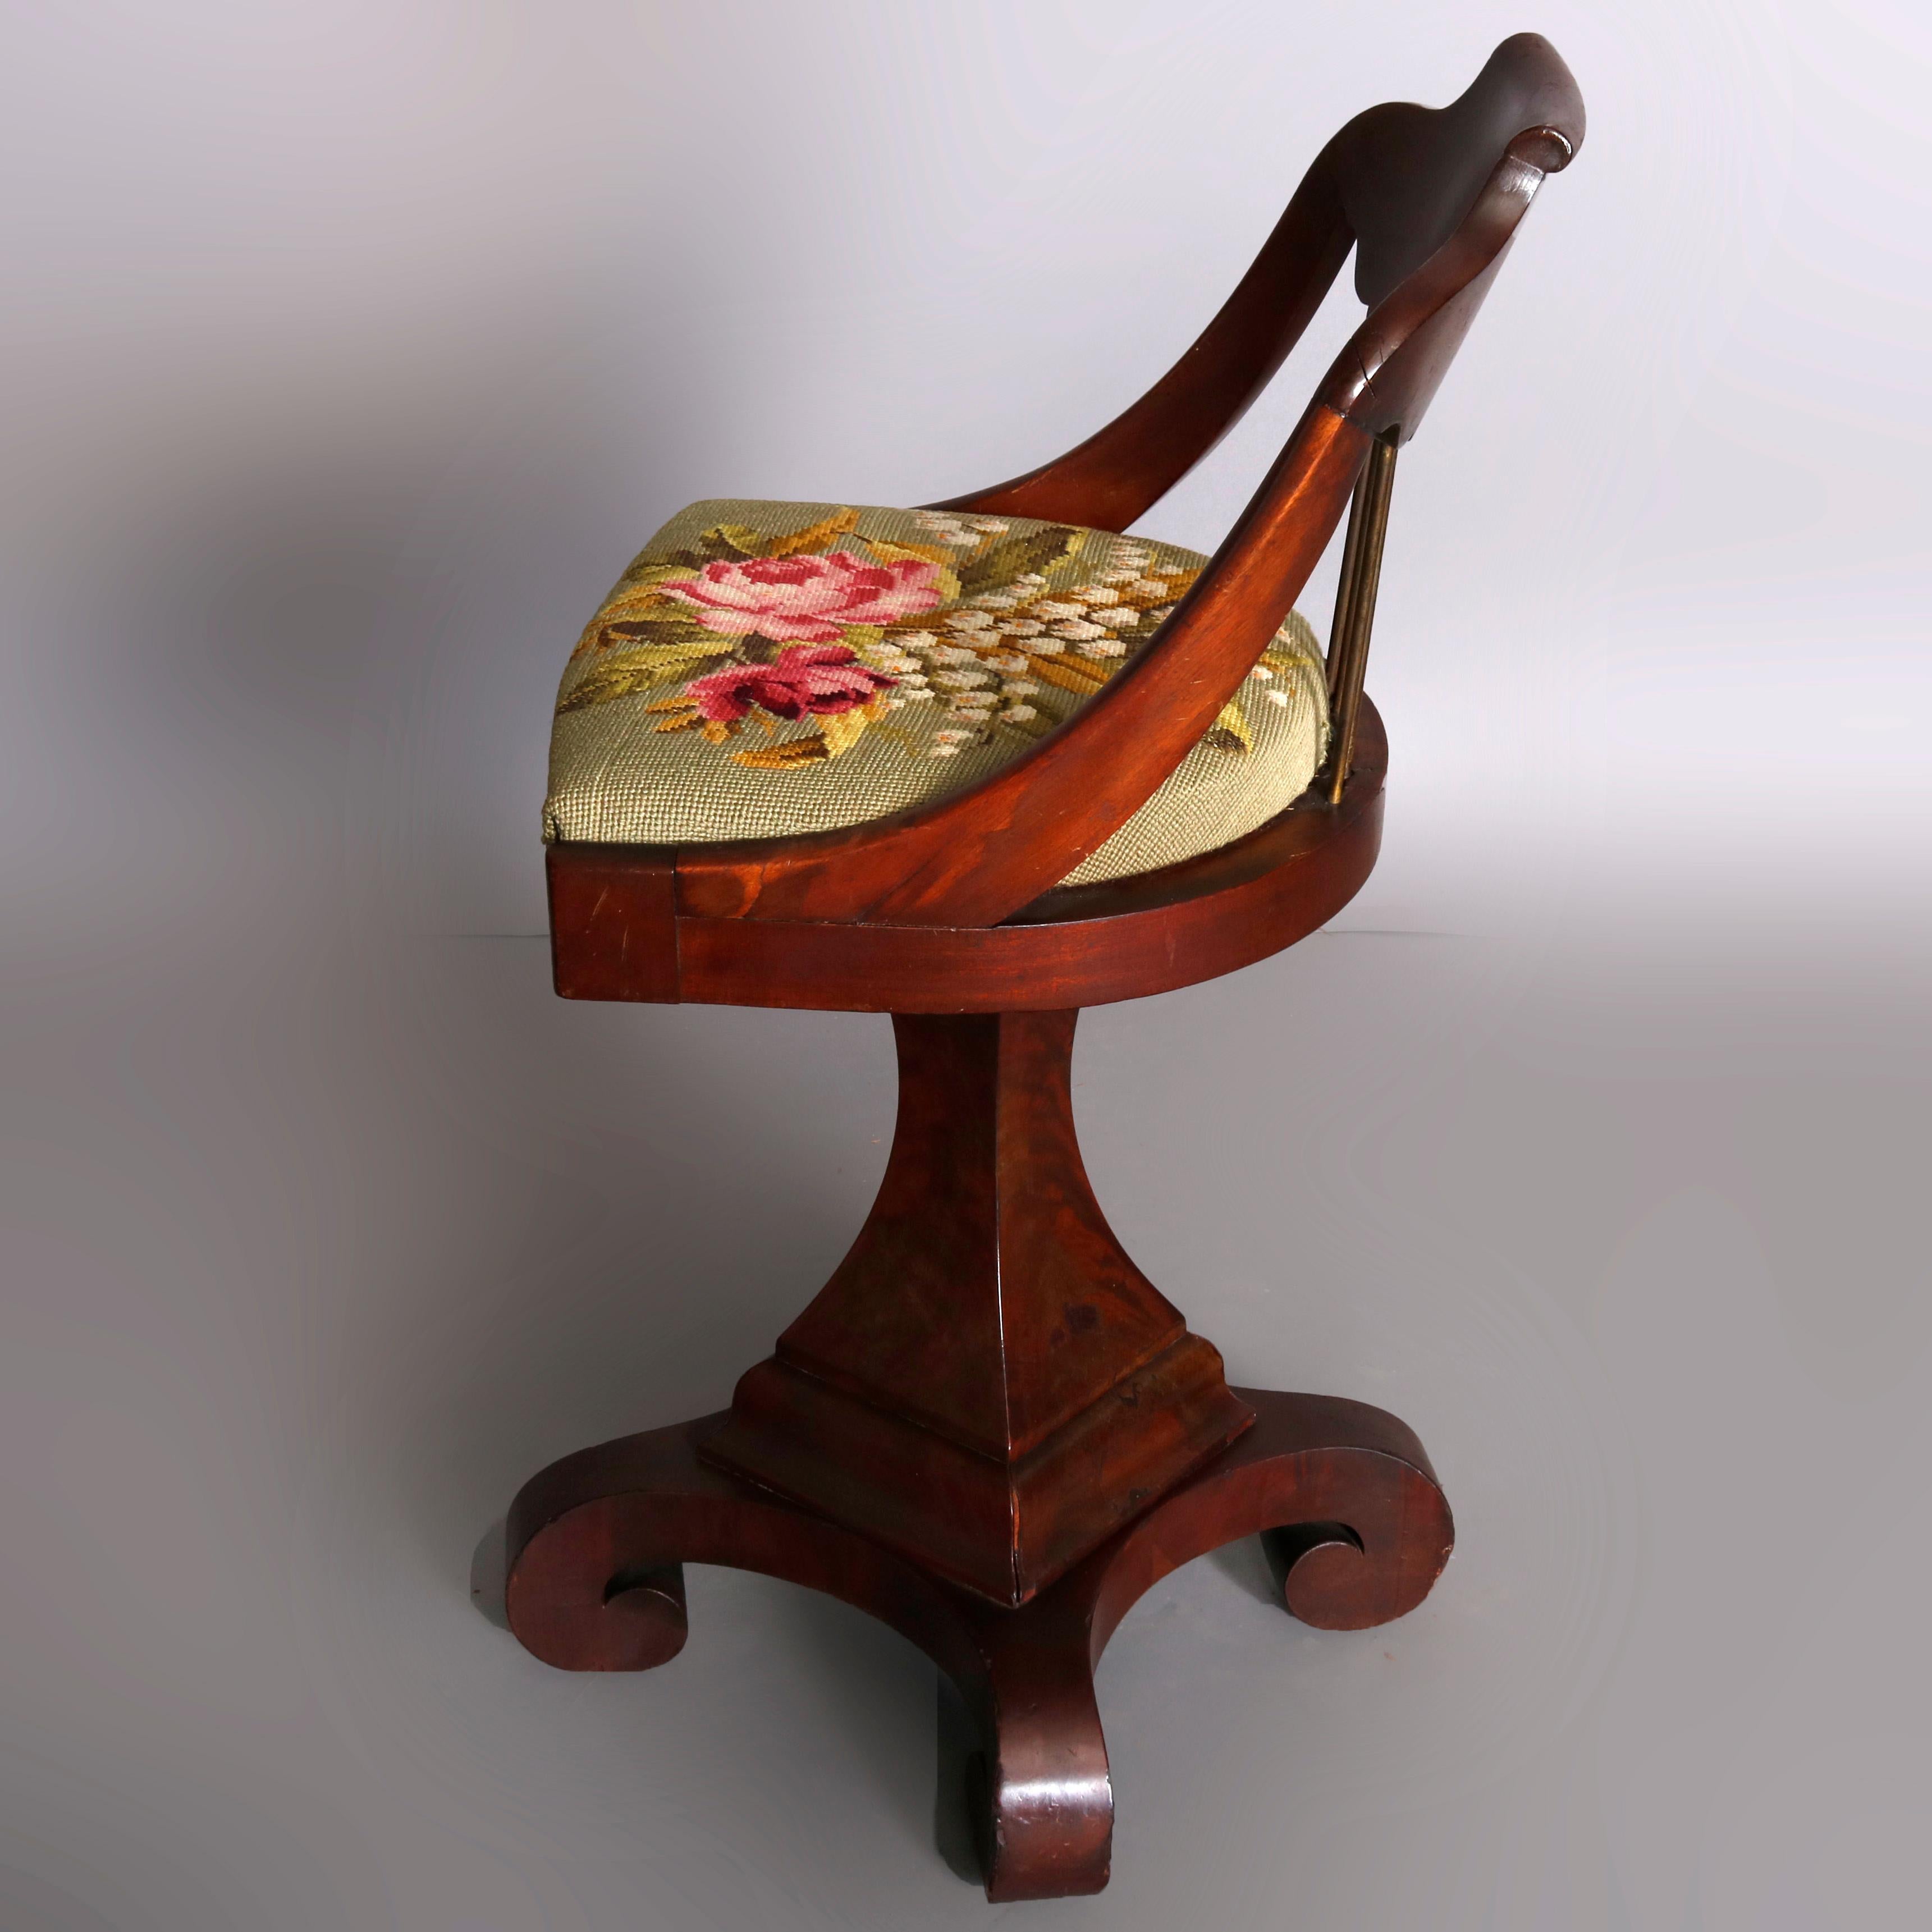 19th Century Antique American Empire Flame Mahogany & Needlepoint Piano Seat, circa 1840